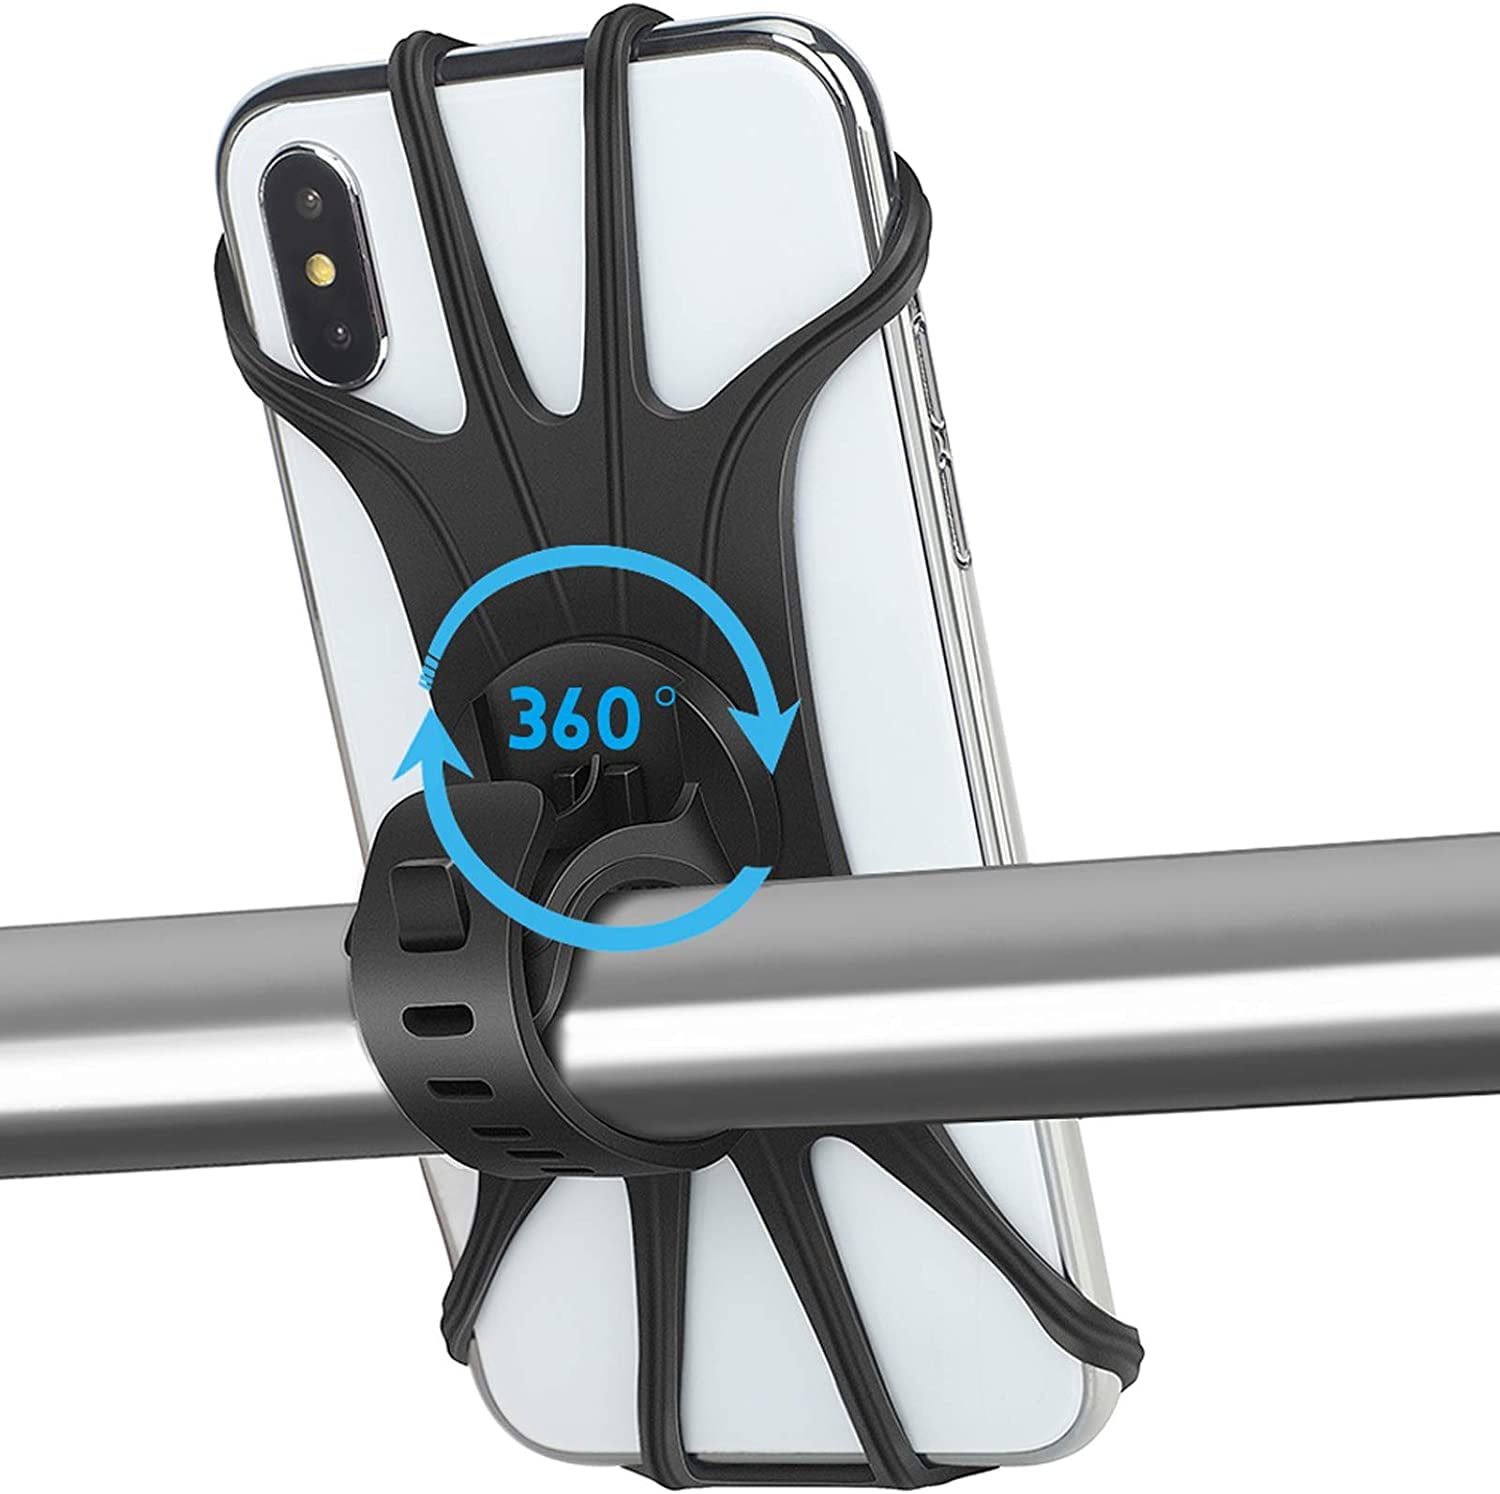 stenografi Kosciuszko Tænk fremad LEAQU Universal Bike Phone Mount, 360° Rotatable Phone Holder for Bike,  Silicone Motorcycle Phone Mount for iPhone 11/Pro/Xs Max/XS XR X/6S/7/8  Plus,Samsung S20/S10/S9,4.0"-6.5" Phones - Walmart.com